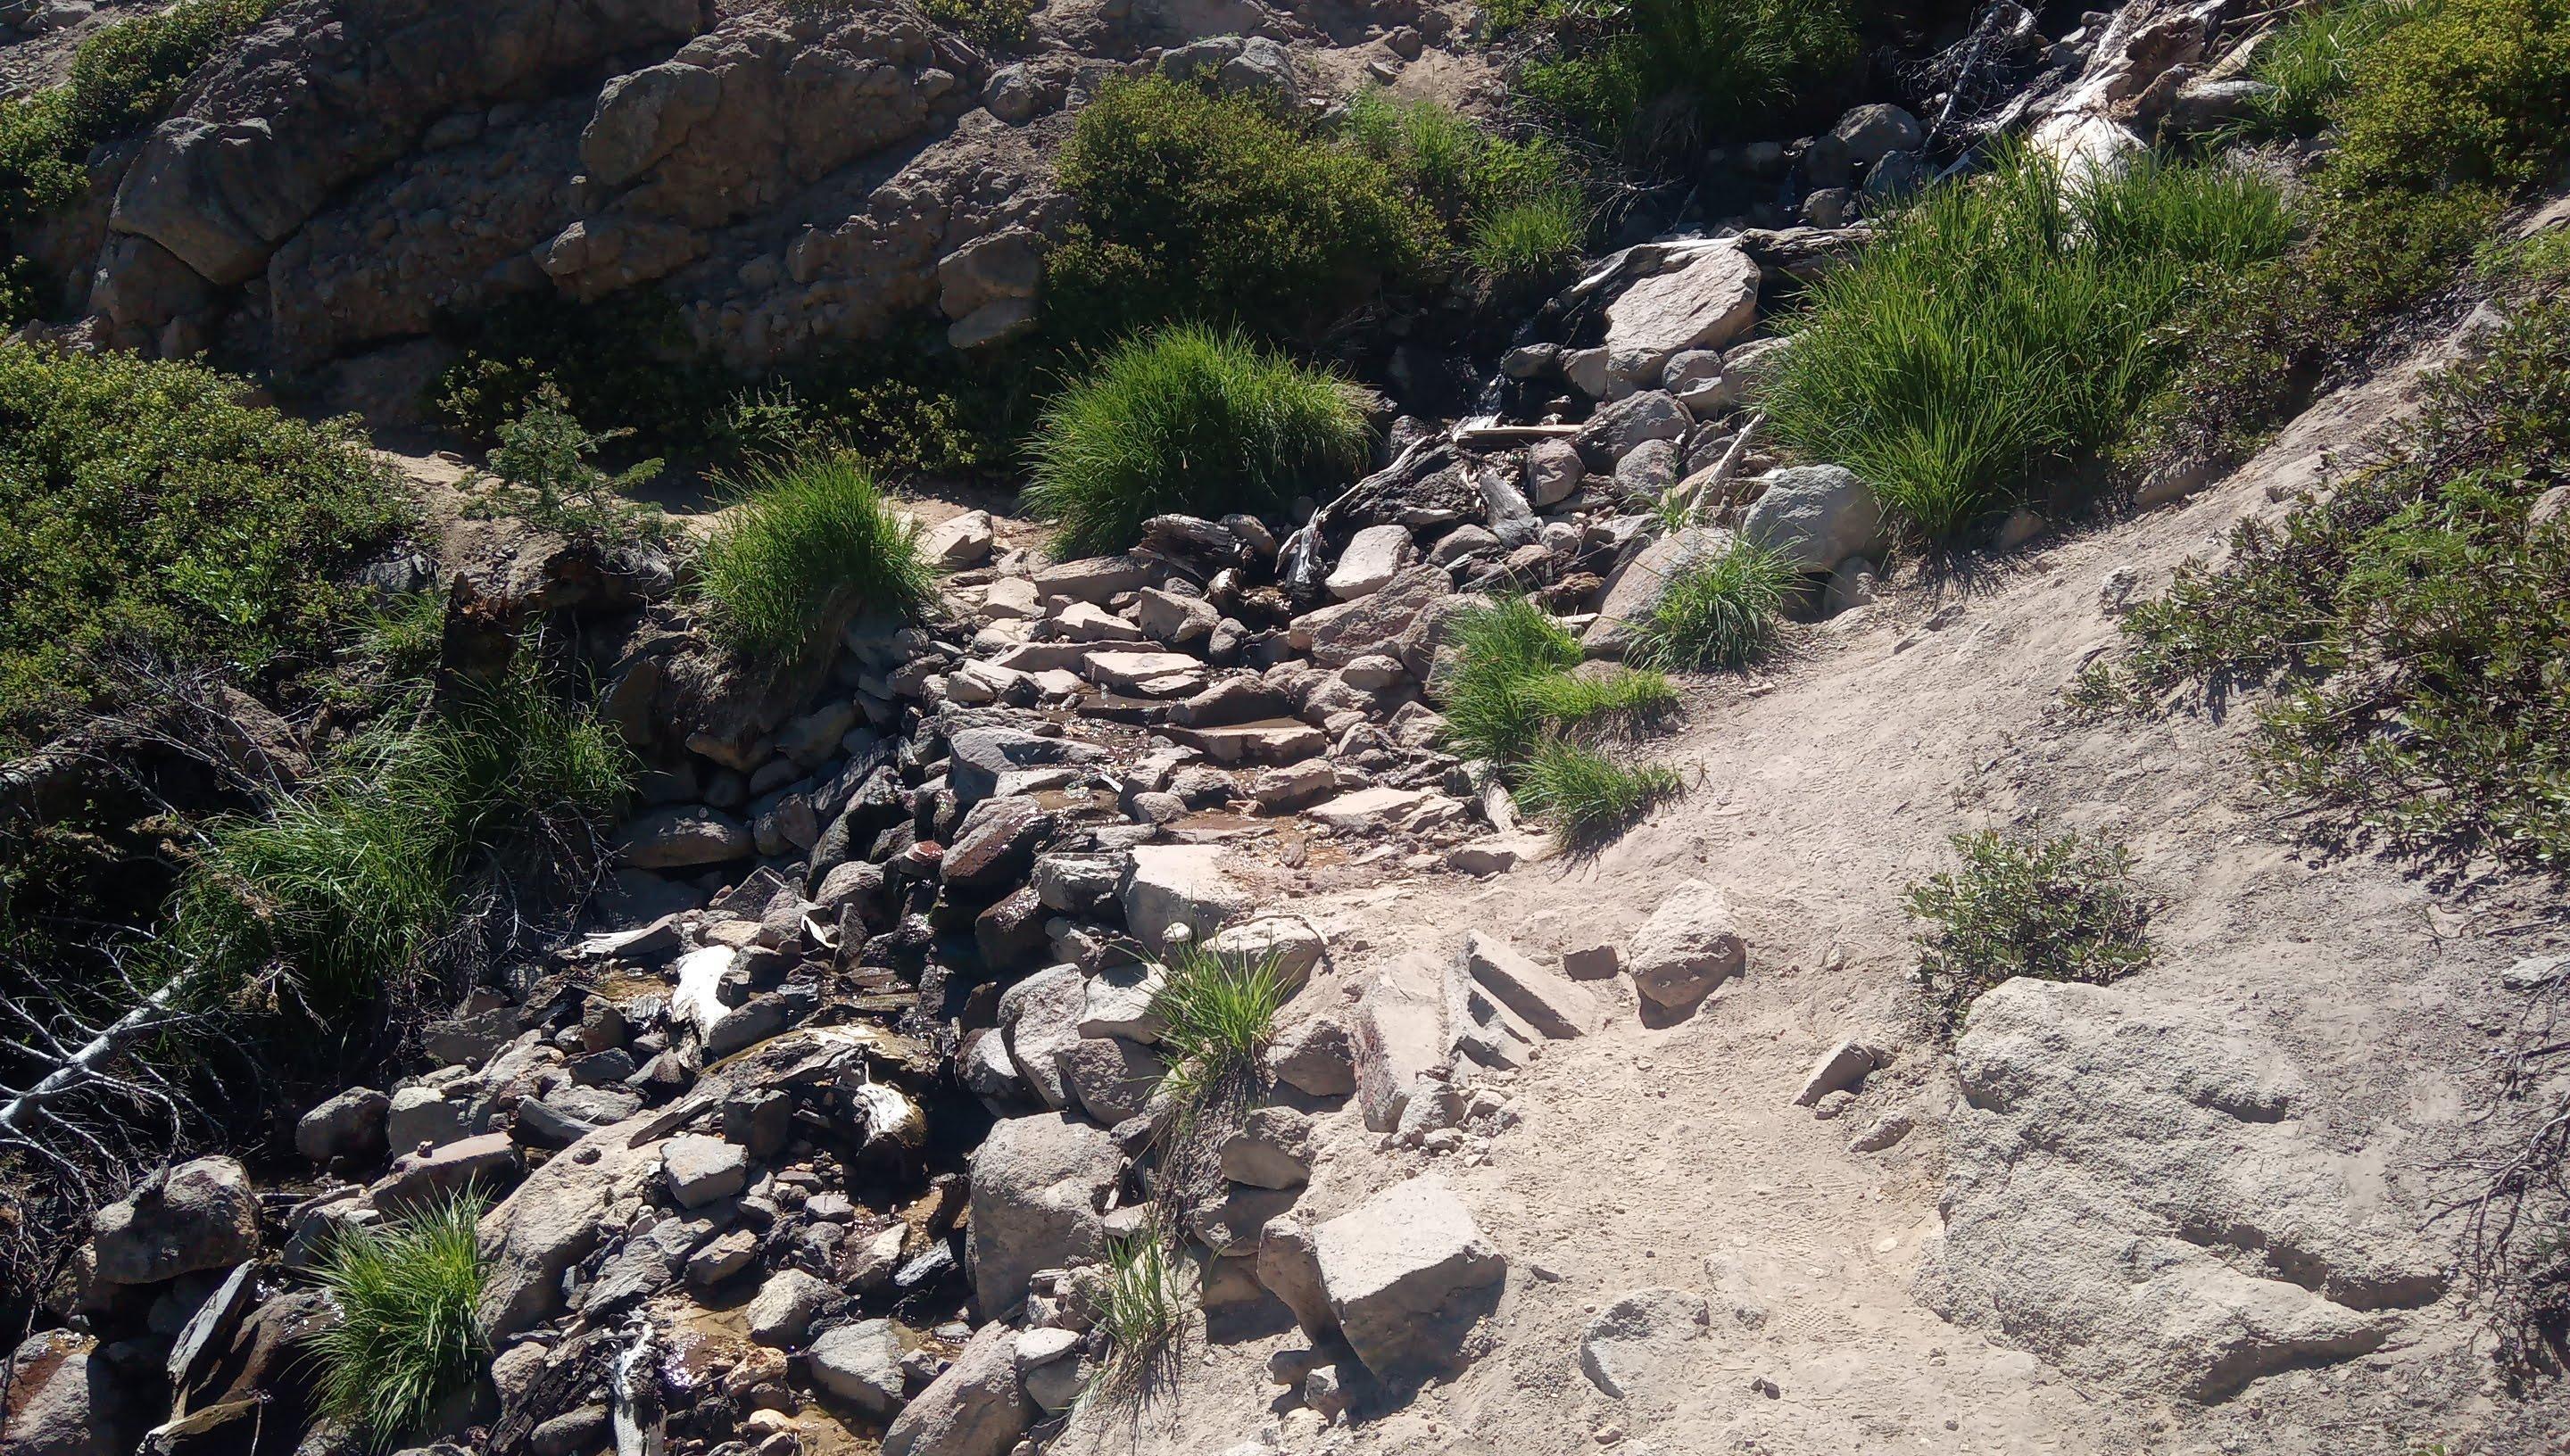 Stream crosses the trail